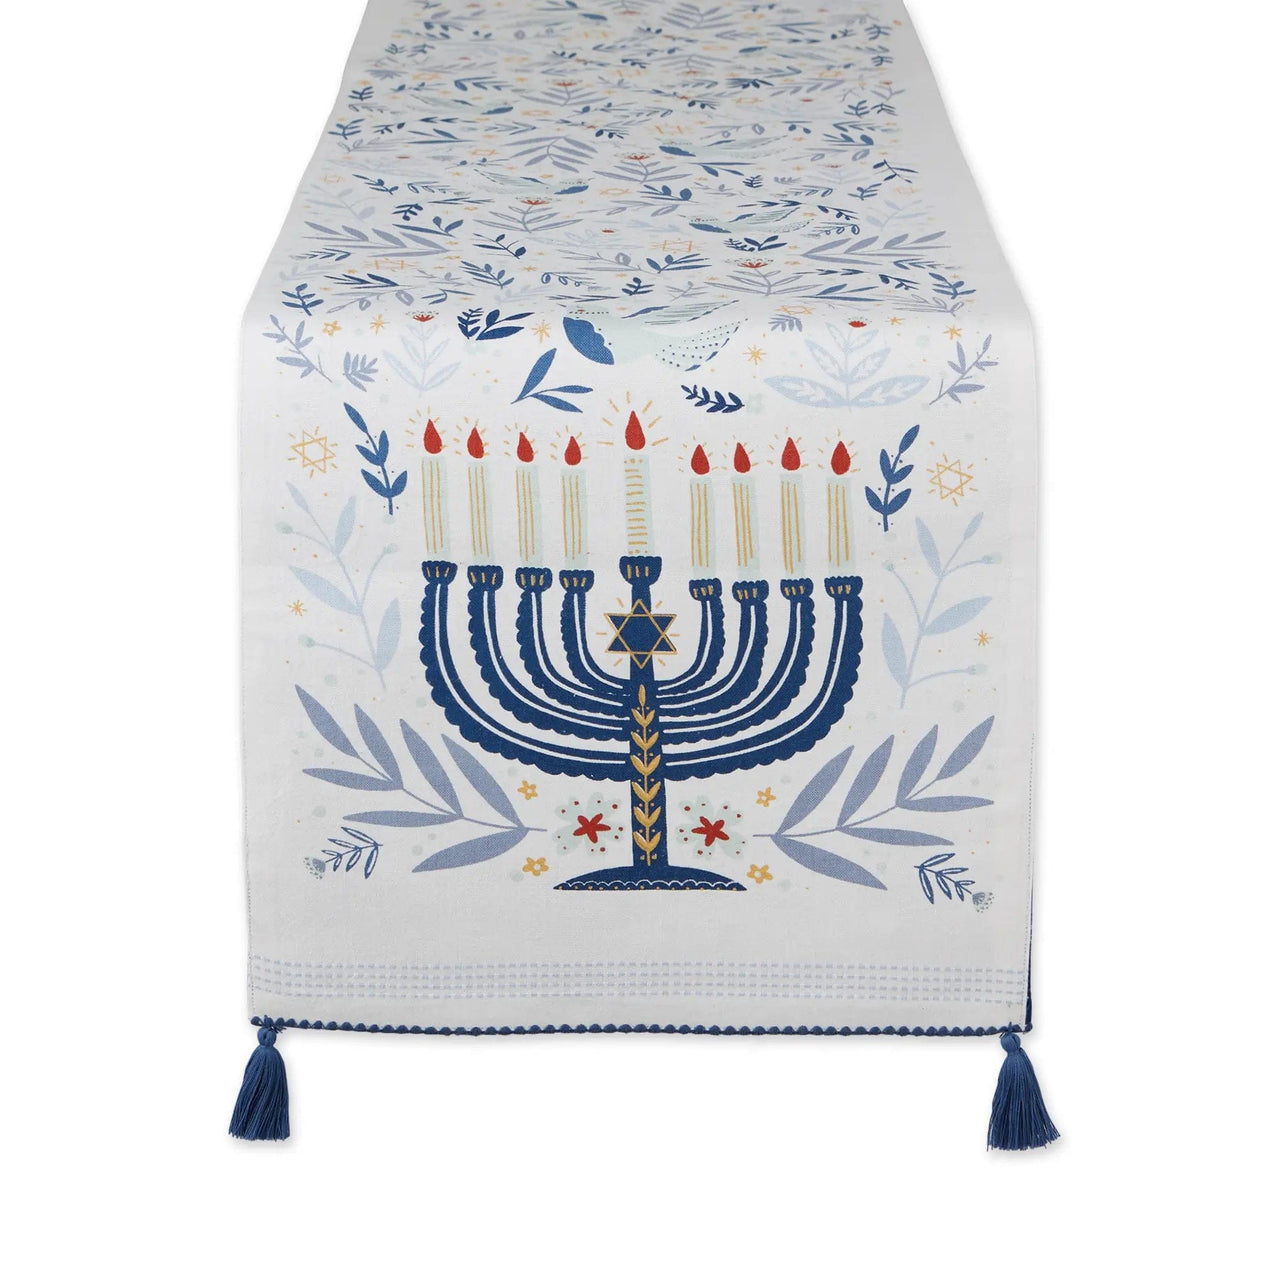 The Cotton & Canvas Co Decorations Hanukkah Menorah Embellished Table Runner